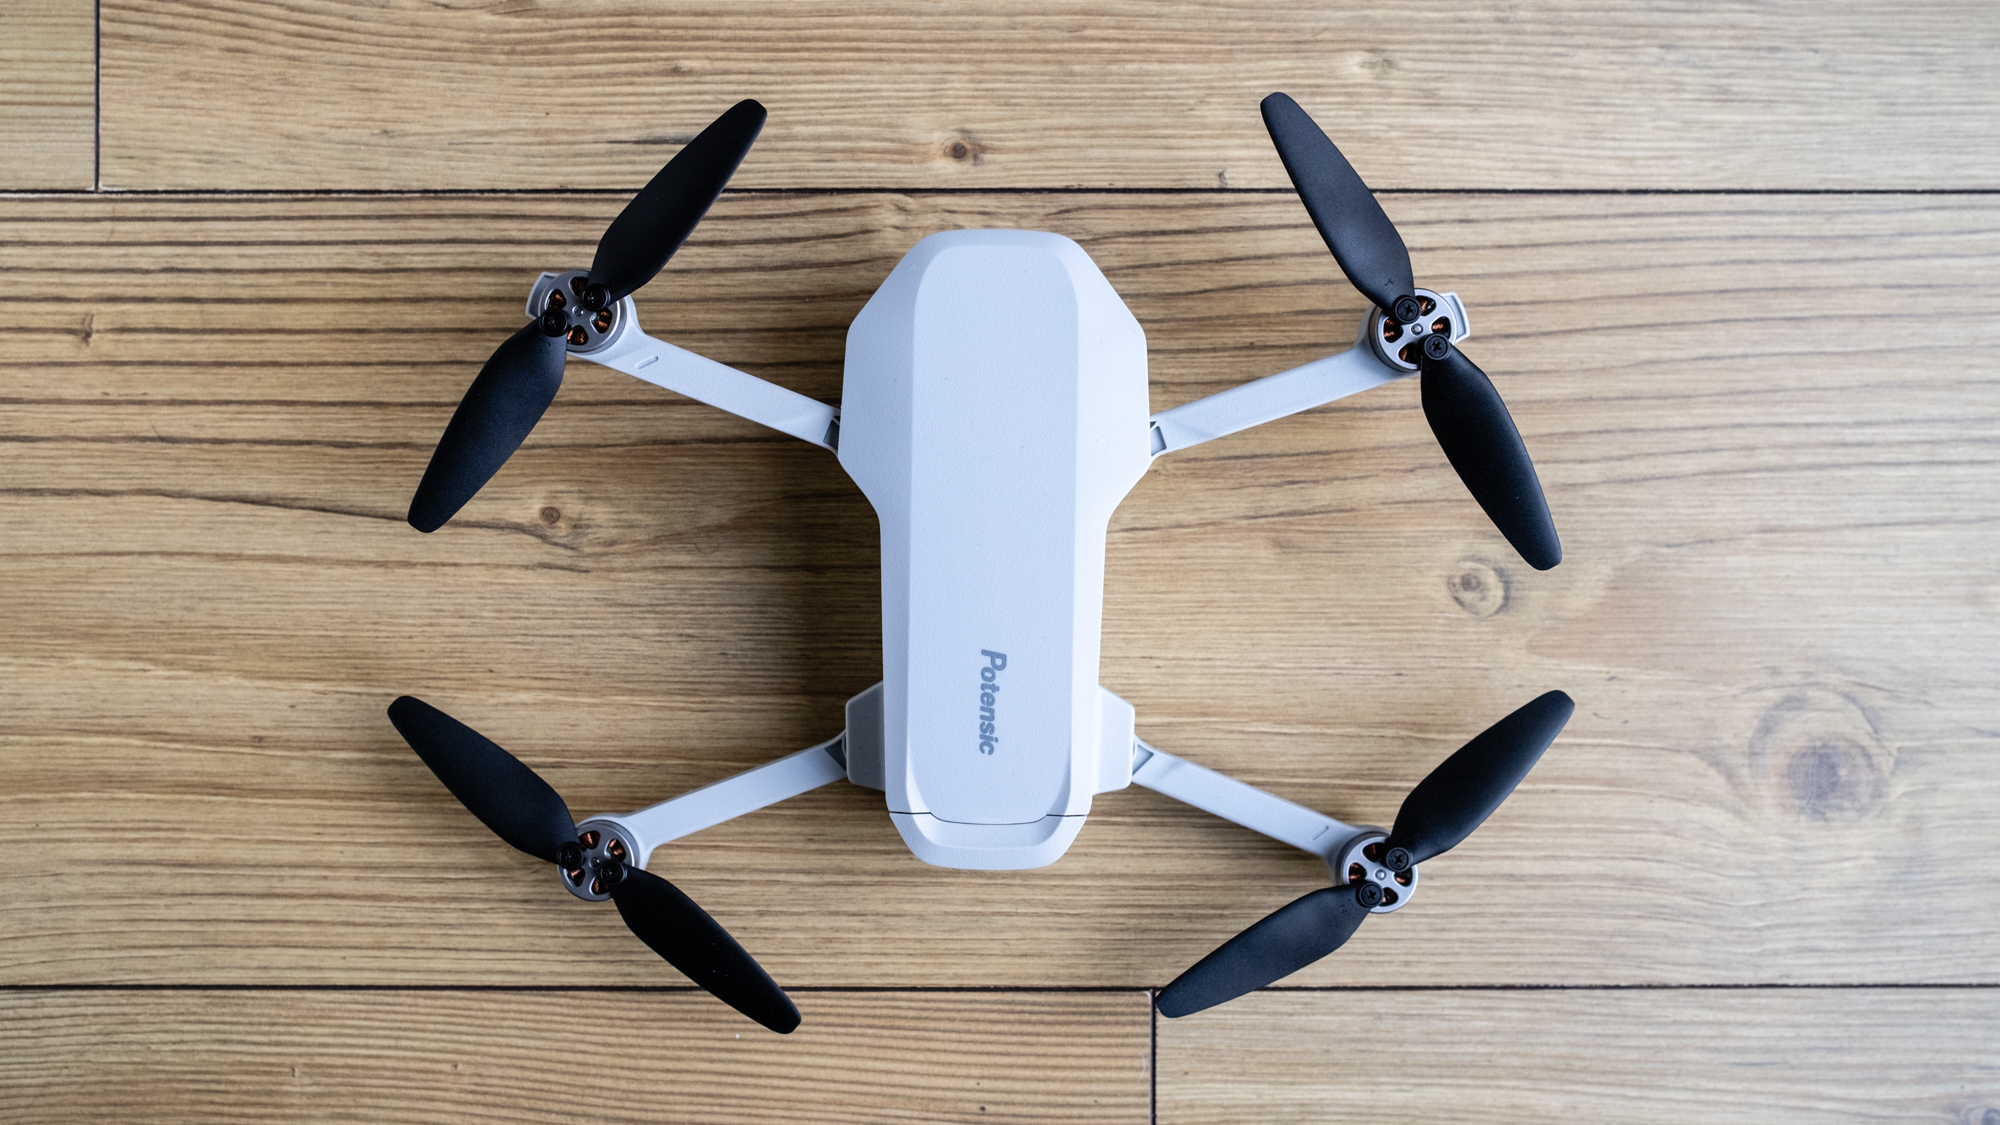 Potensic Atom SE drone unfolded on a wooden floor